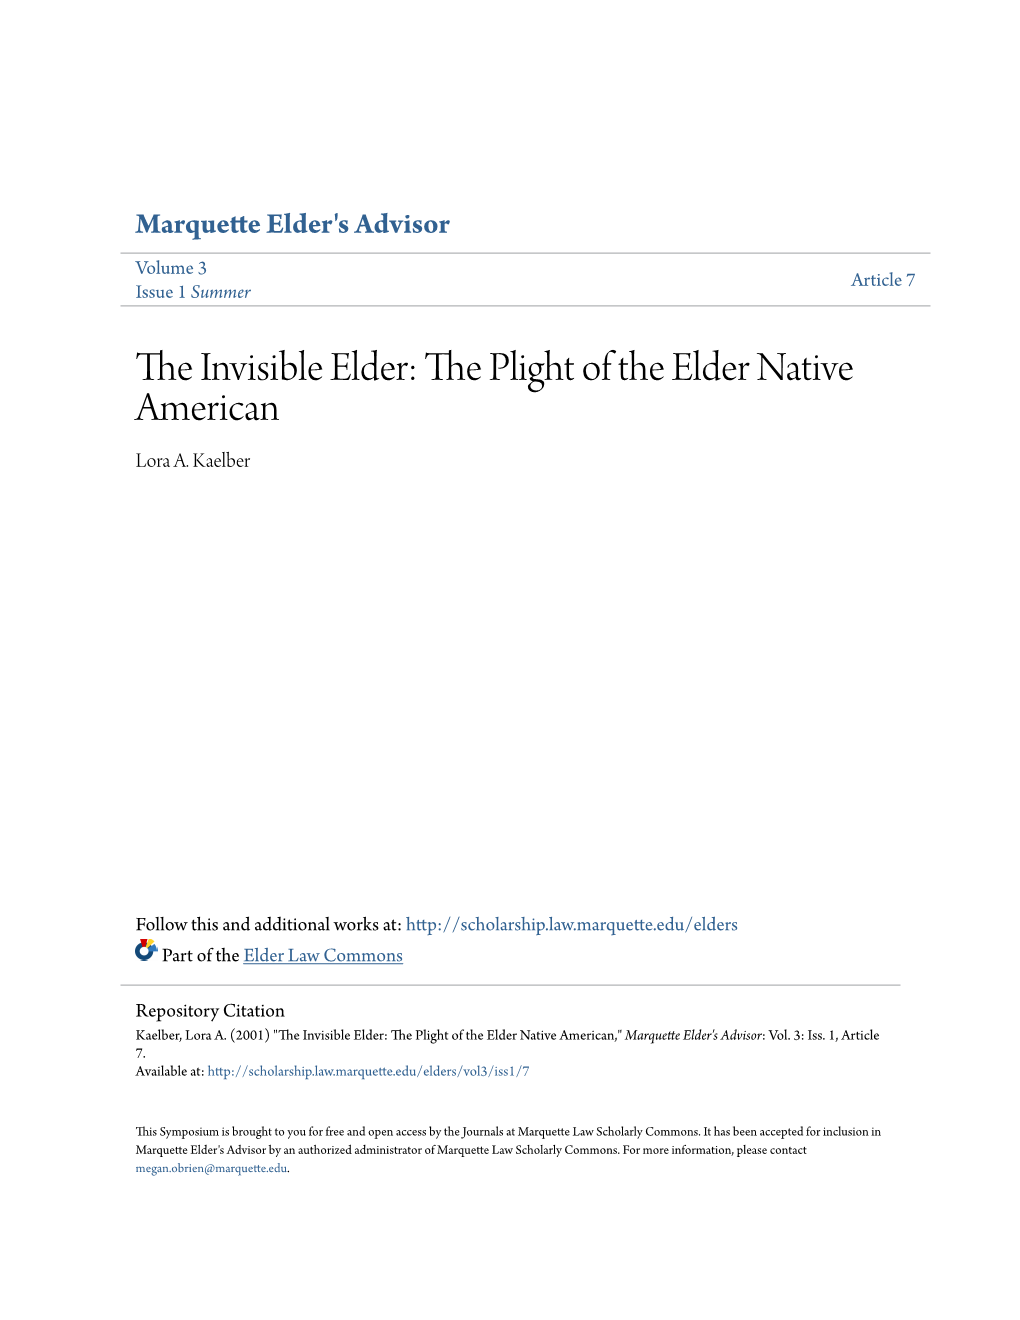 The Invisible Elder: the Plight of the Elder Native American